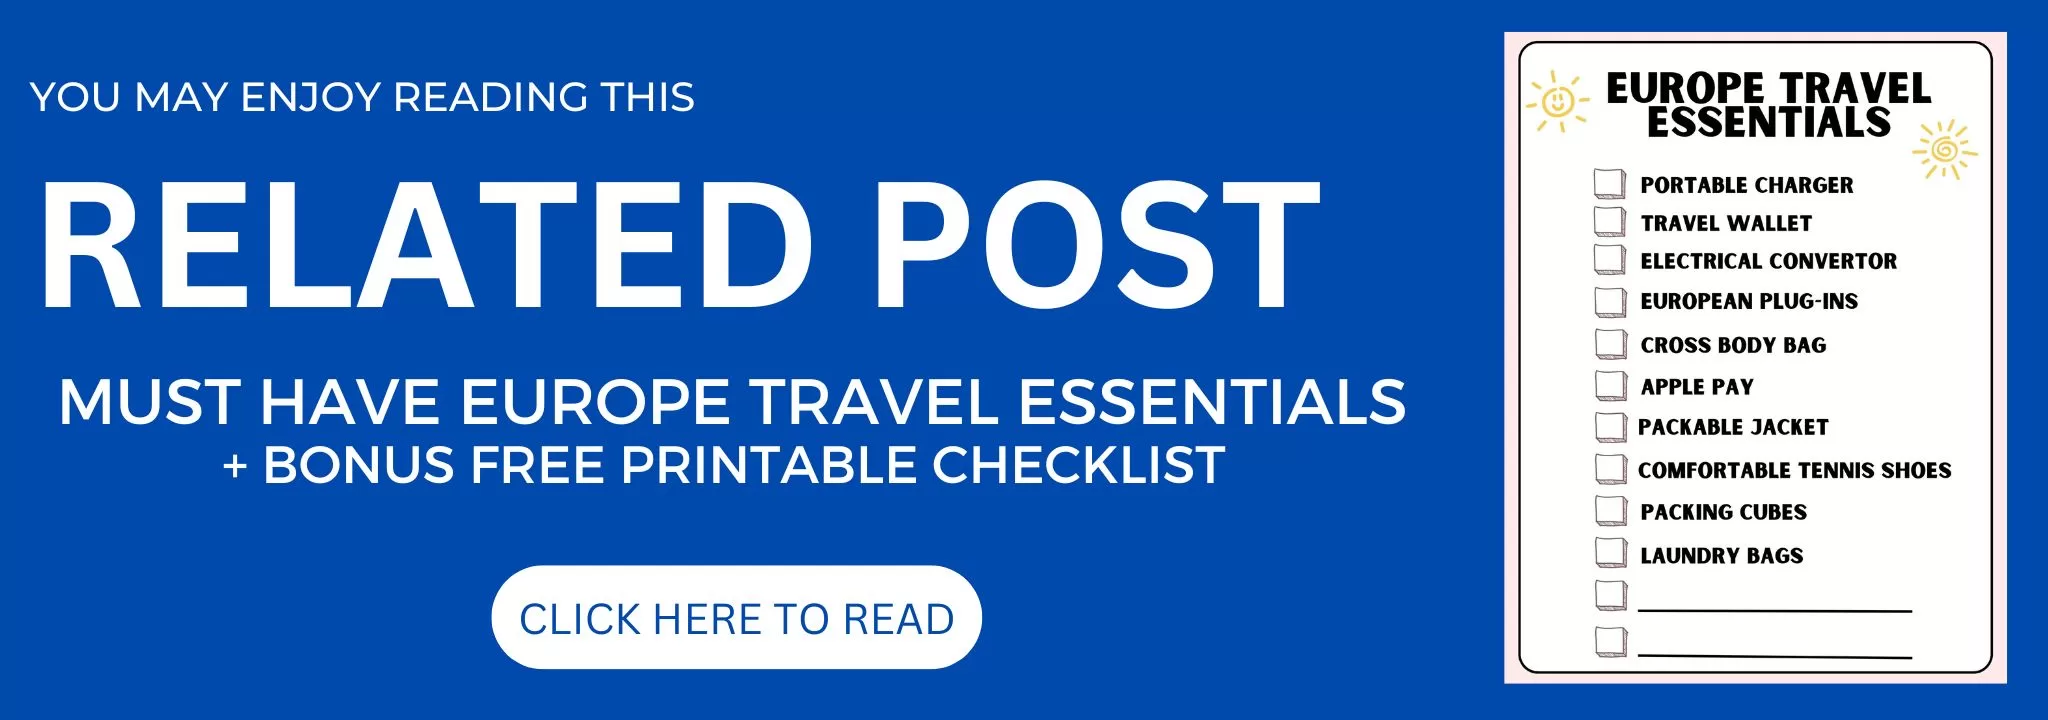 Europe Travel Essentials